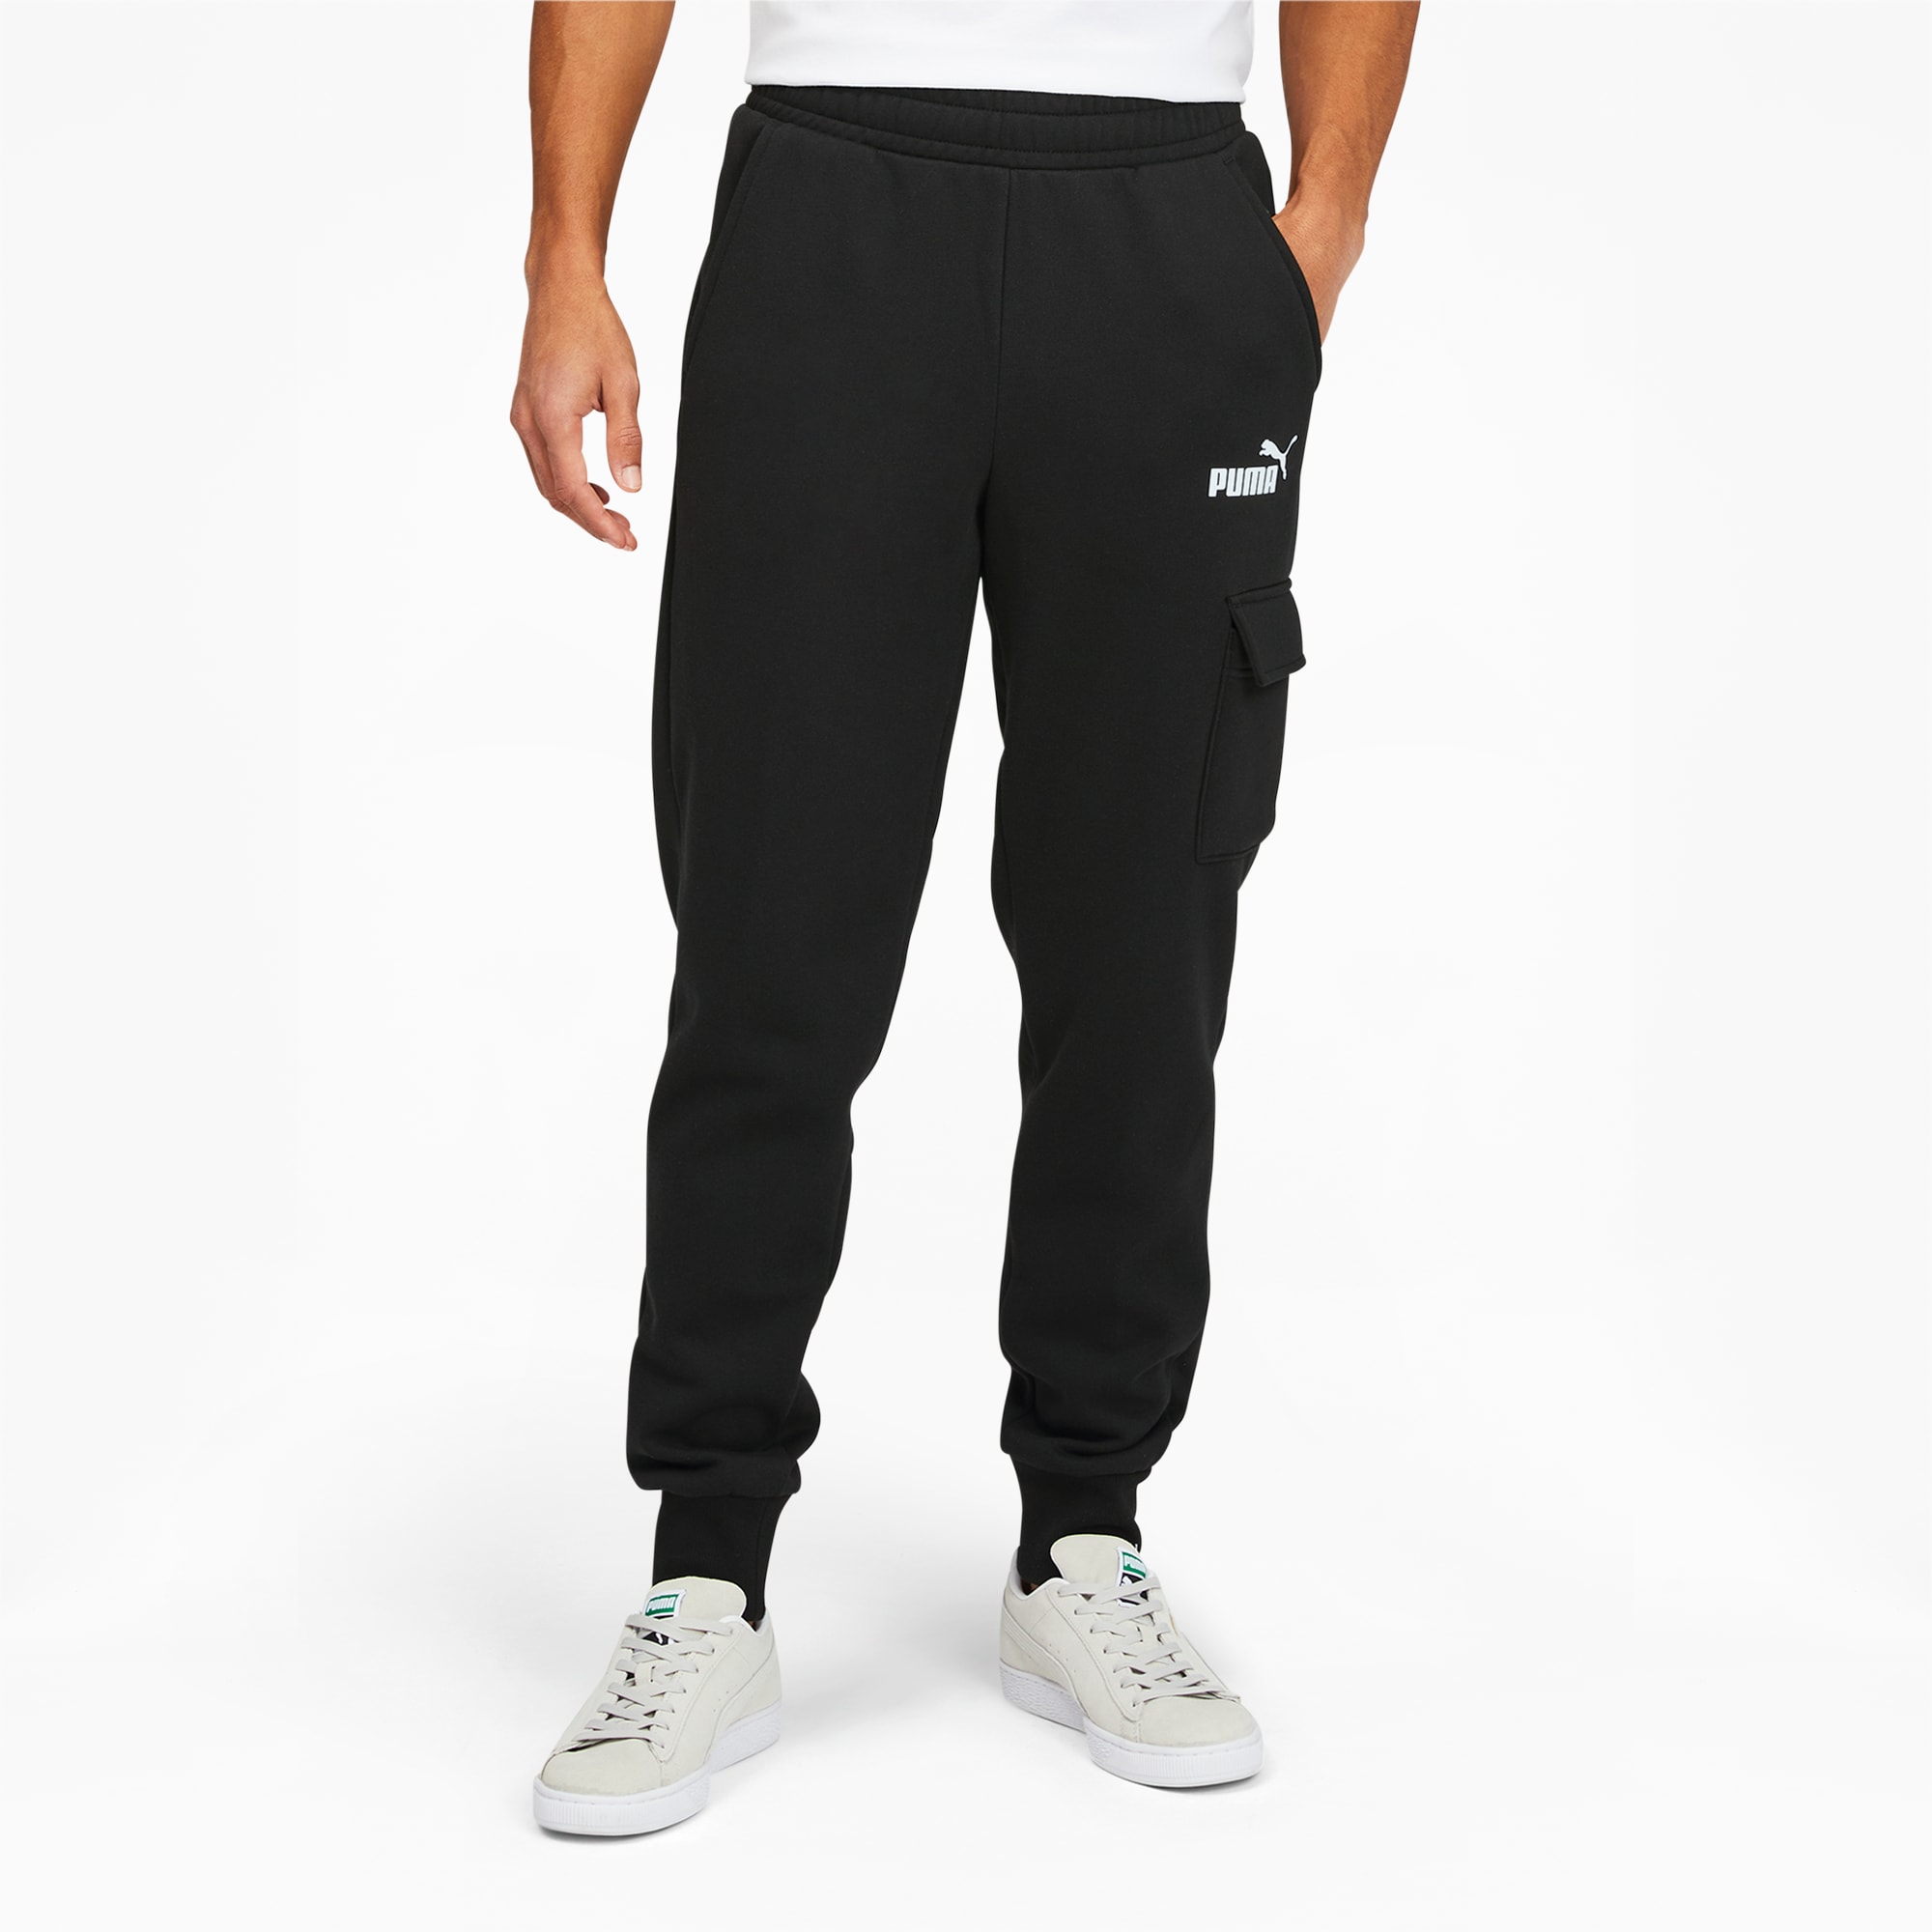 Nike Essentials Fleece cuffed cargo sweatpants in gray heather - gray